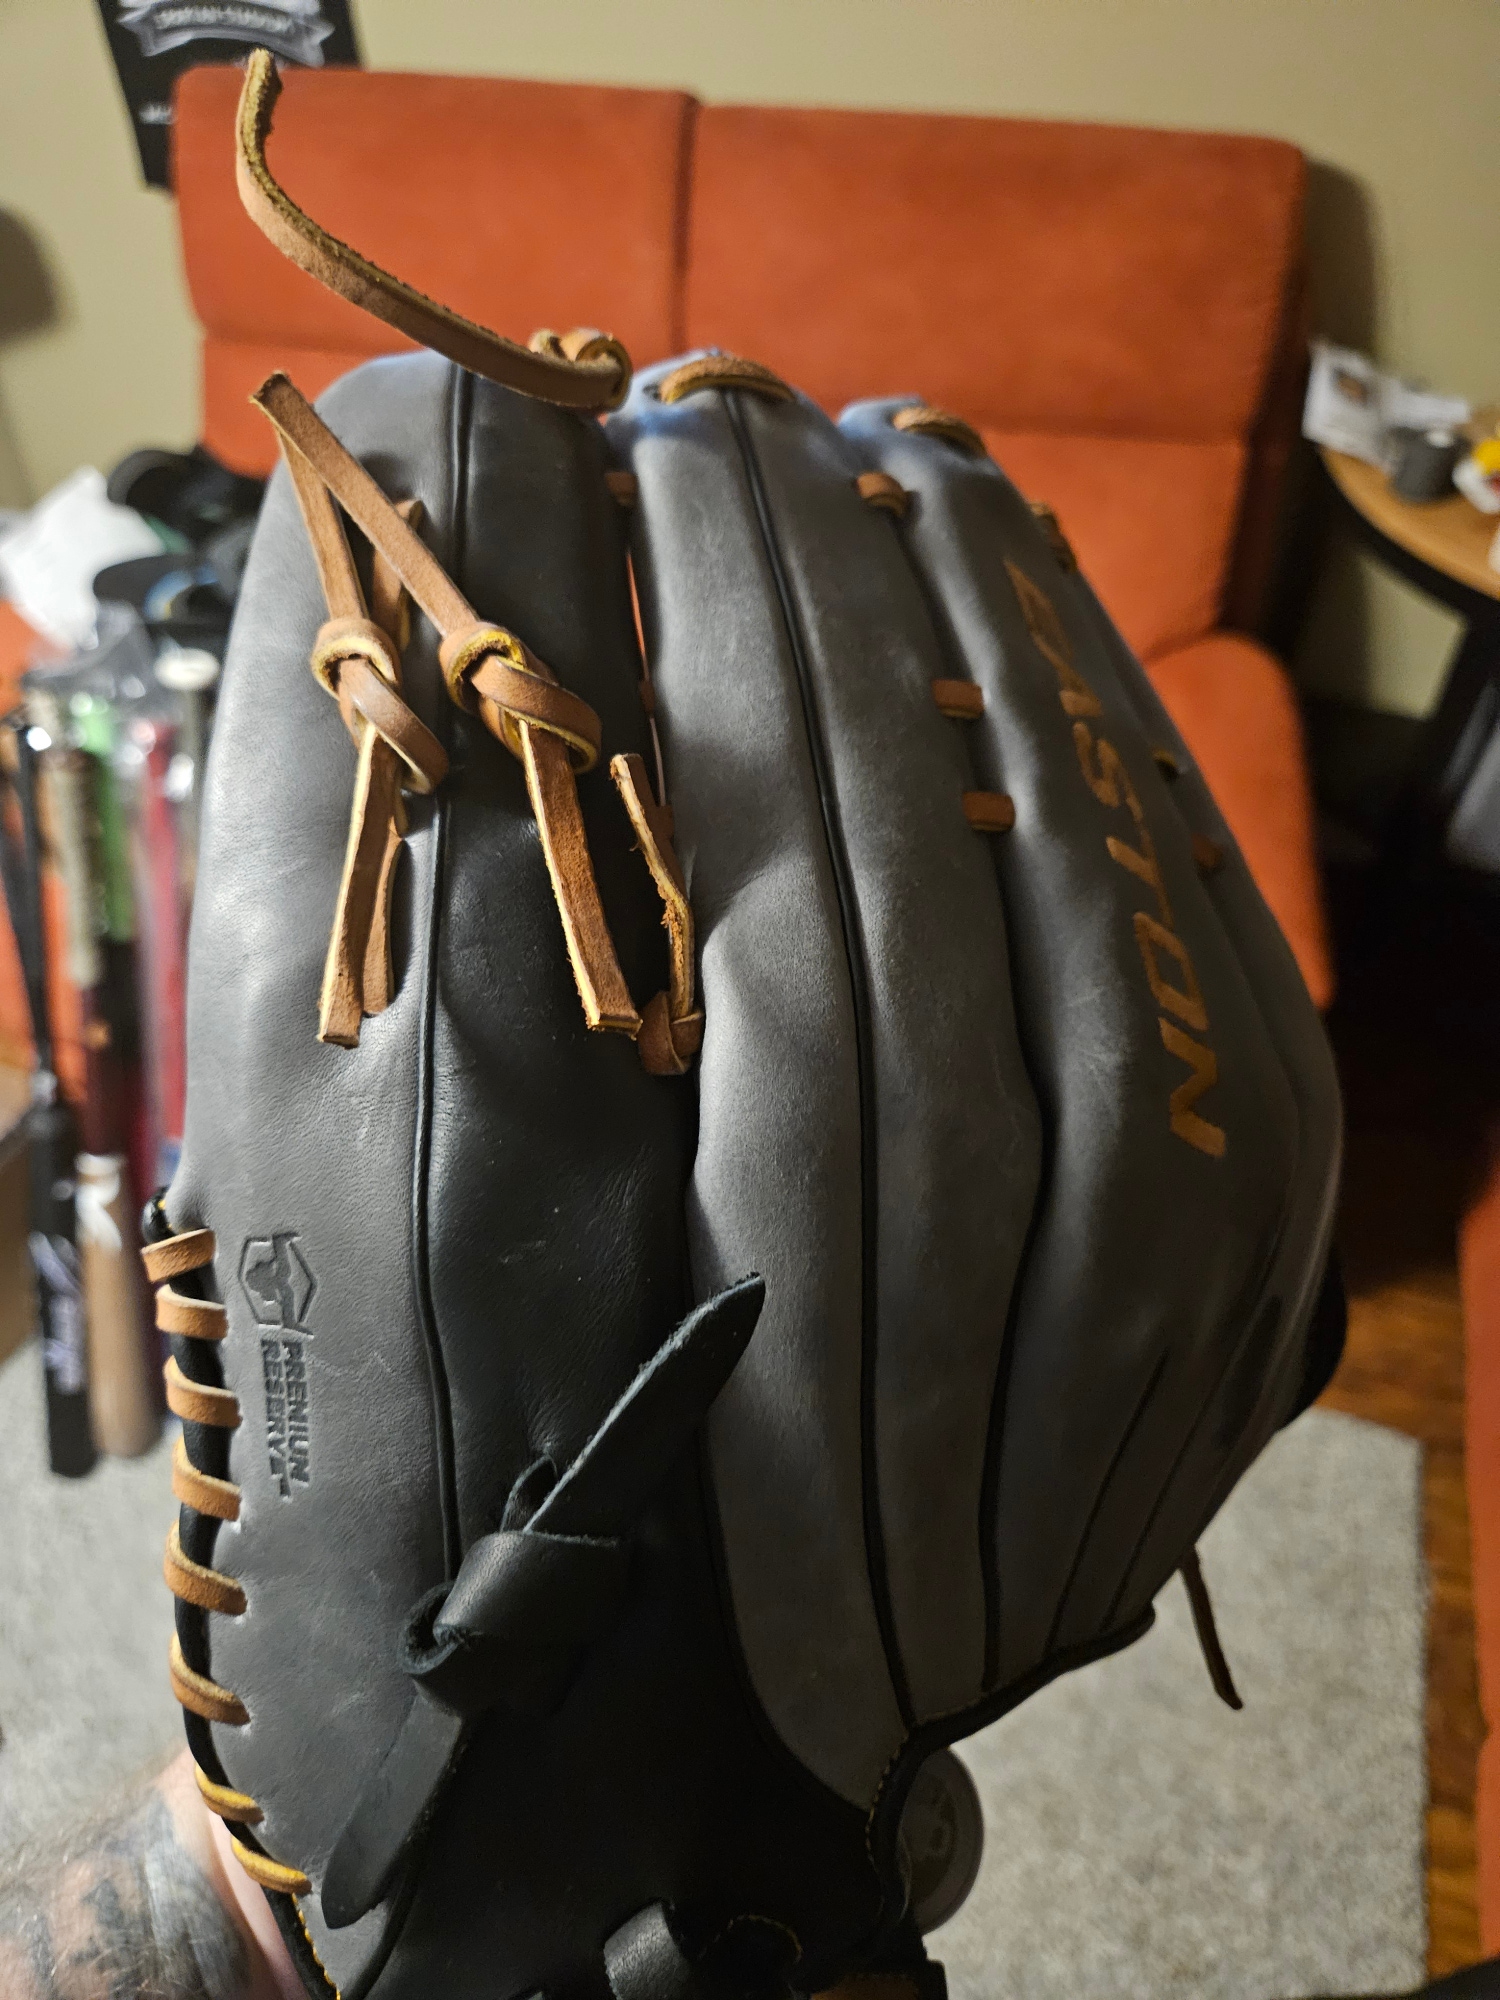 New Easton Professional Collection Softball Glove 14"